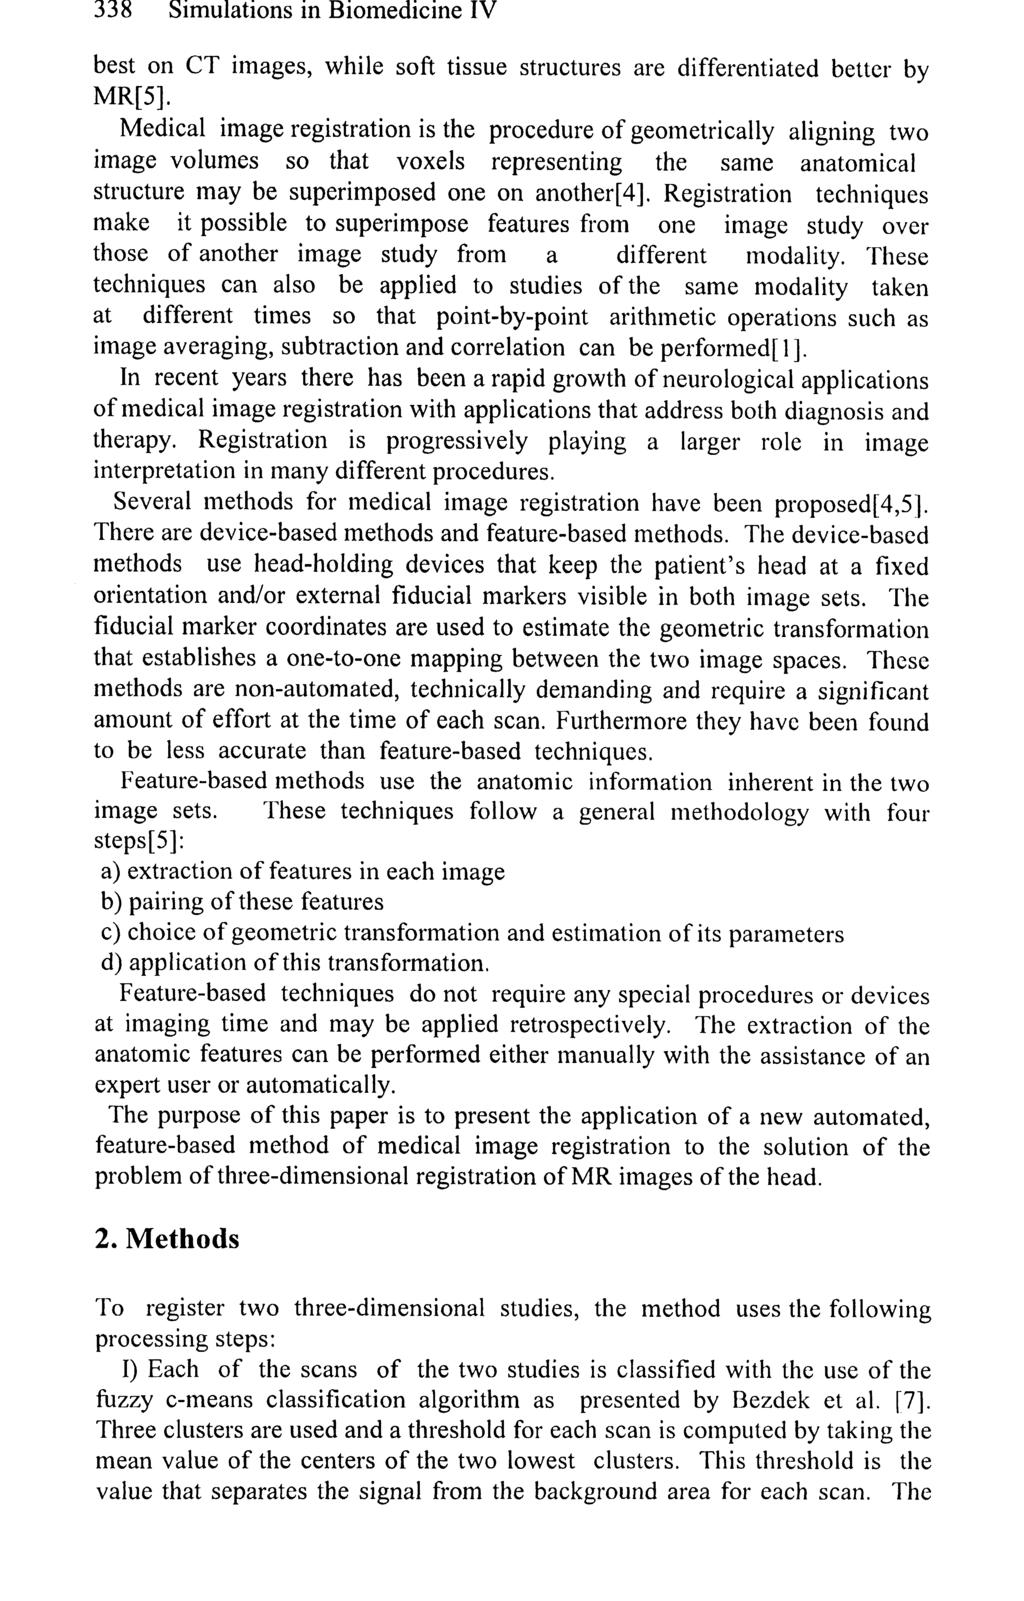 338 Simulations m Biomedicme IV Transactions on Biomedicine and Health vol 4, 1997 WIT Press, www.witpress.